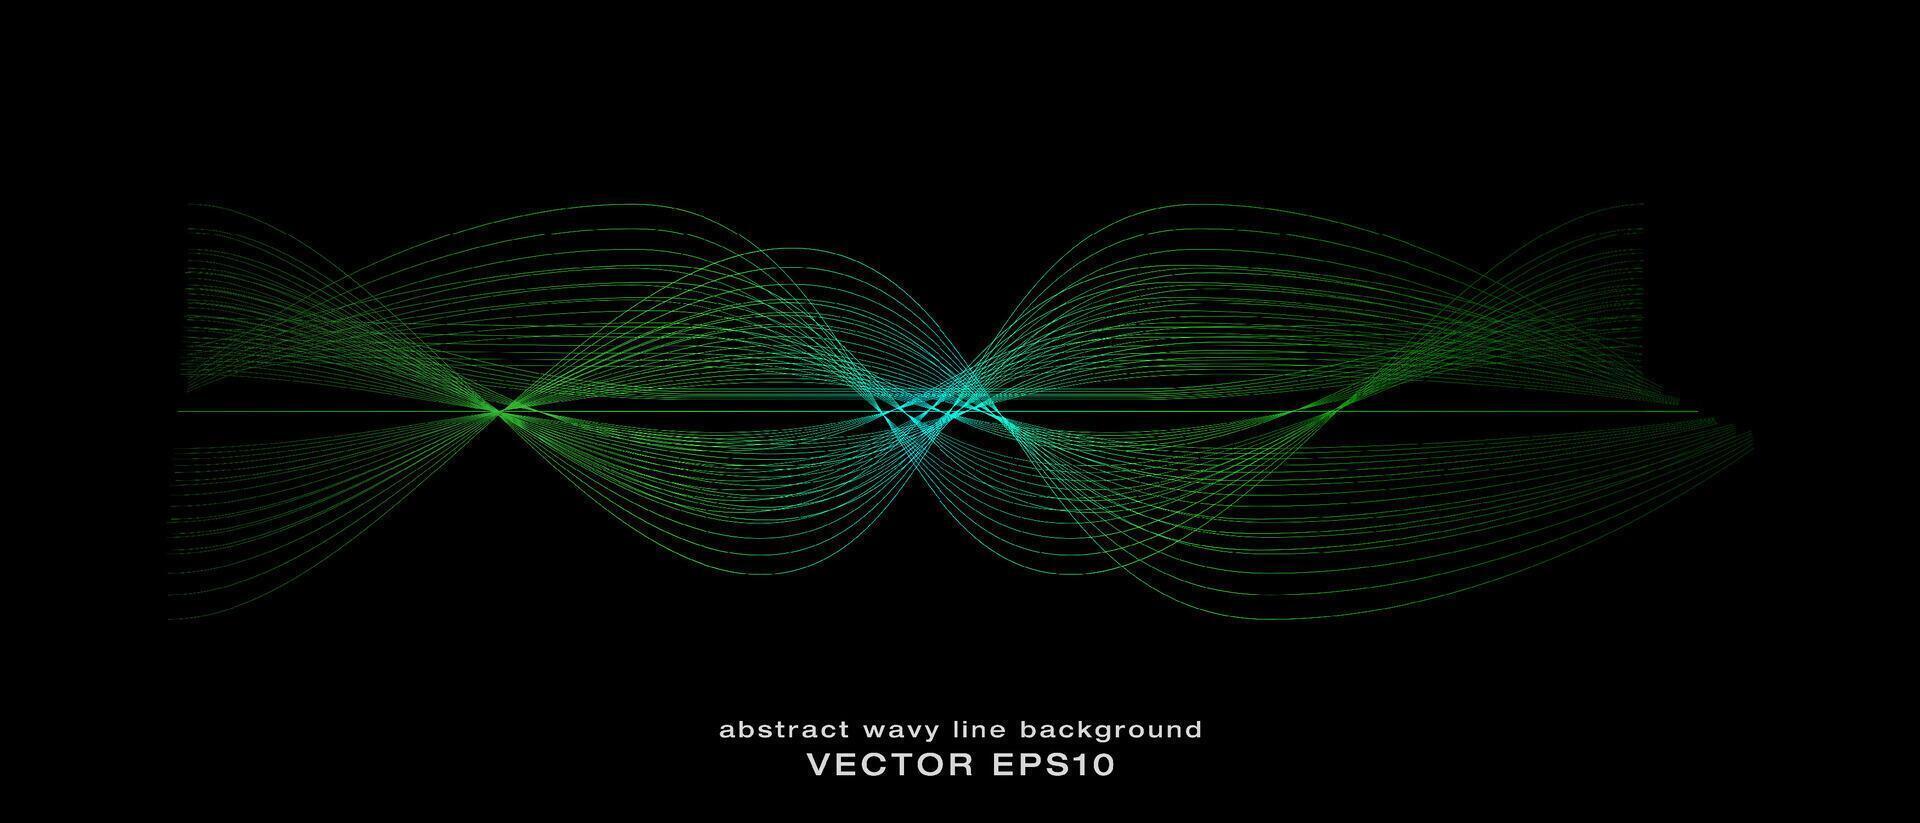 resumen ondulado dinámica azul verde Violeta ligero líneas curva bandera en negro antecedentes en concepto tecnología, neural red, neurología, ciencia, música, neón ligero. vector